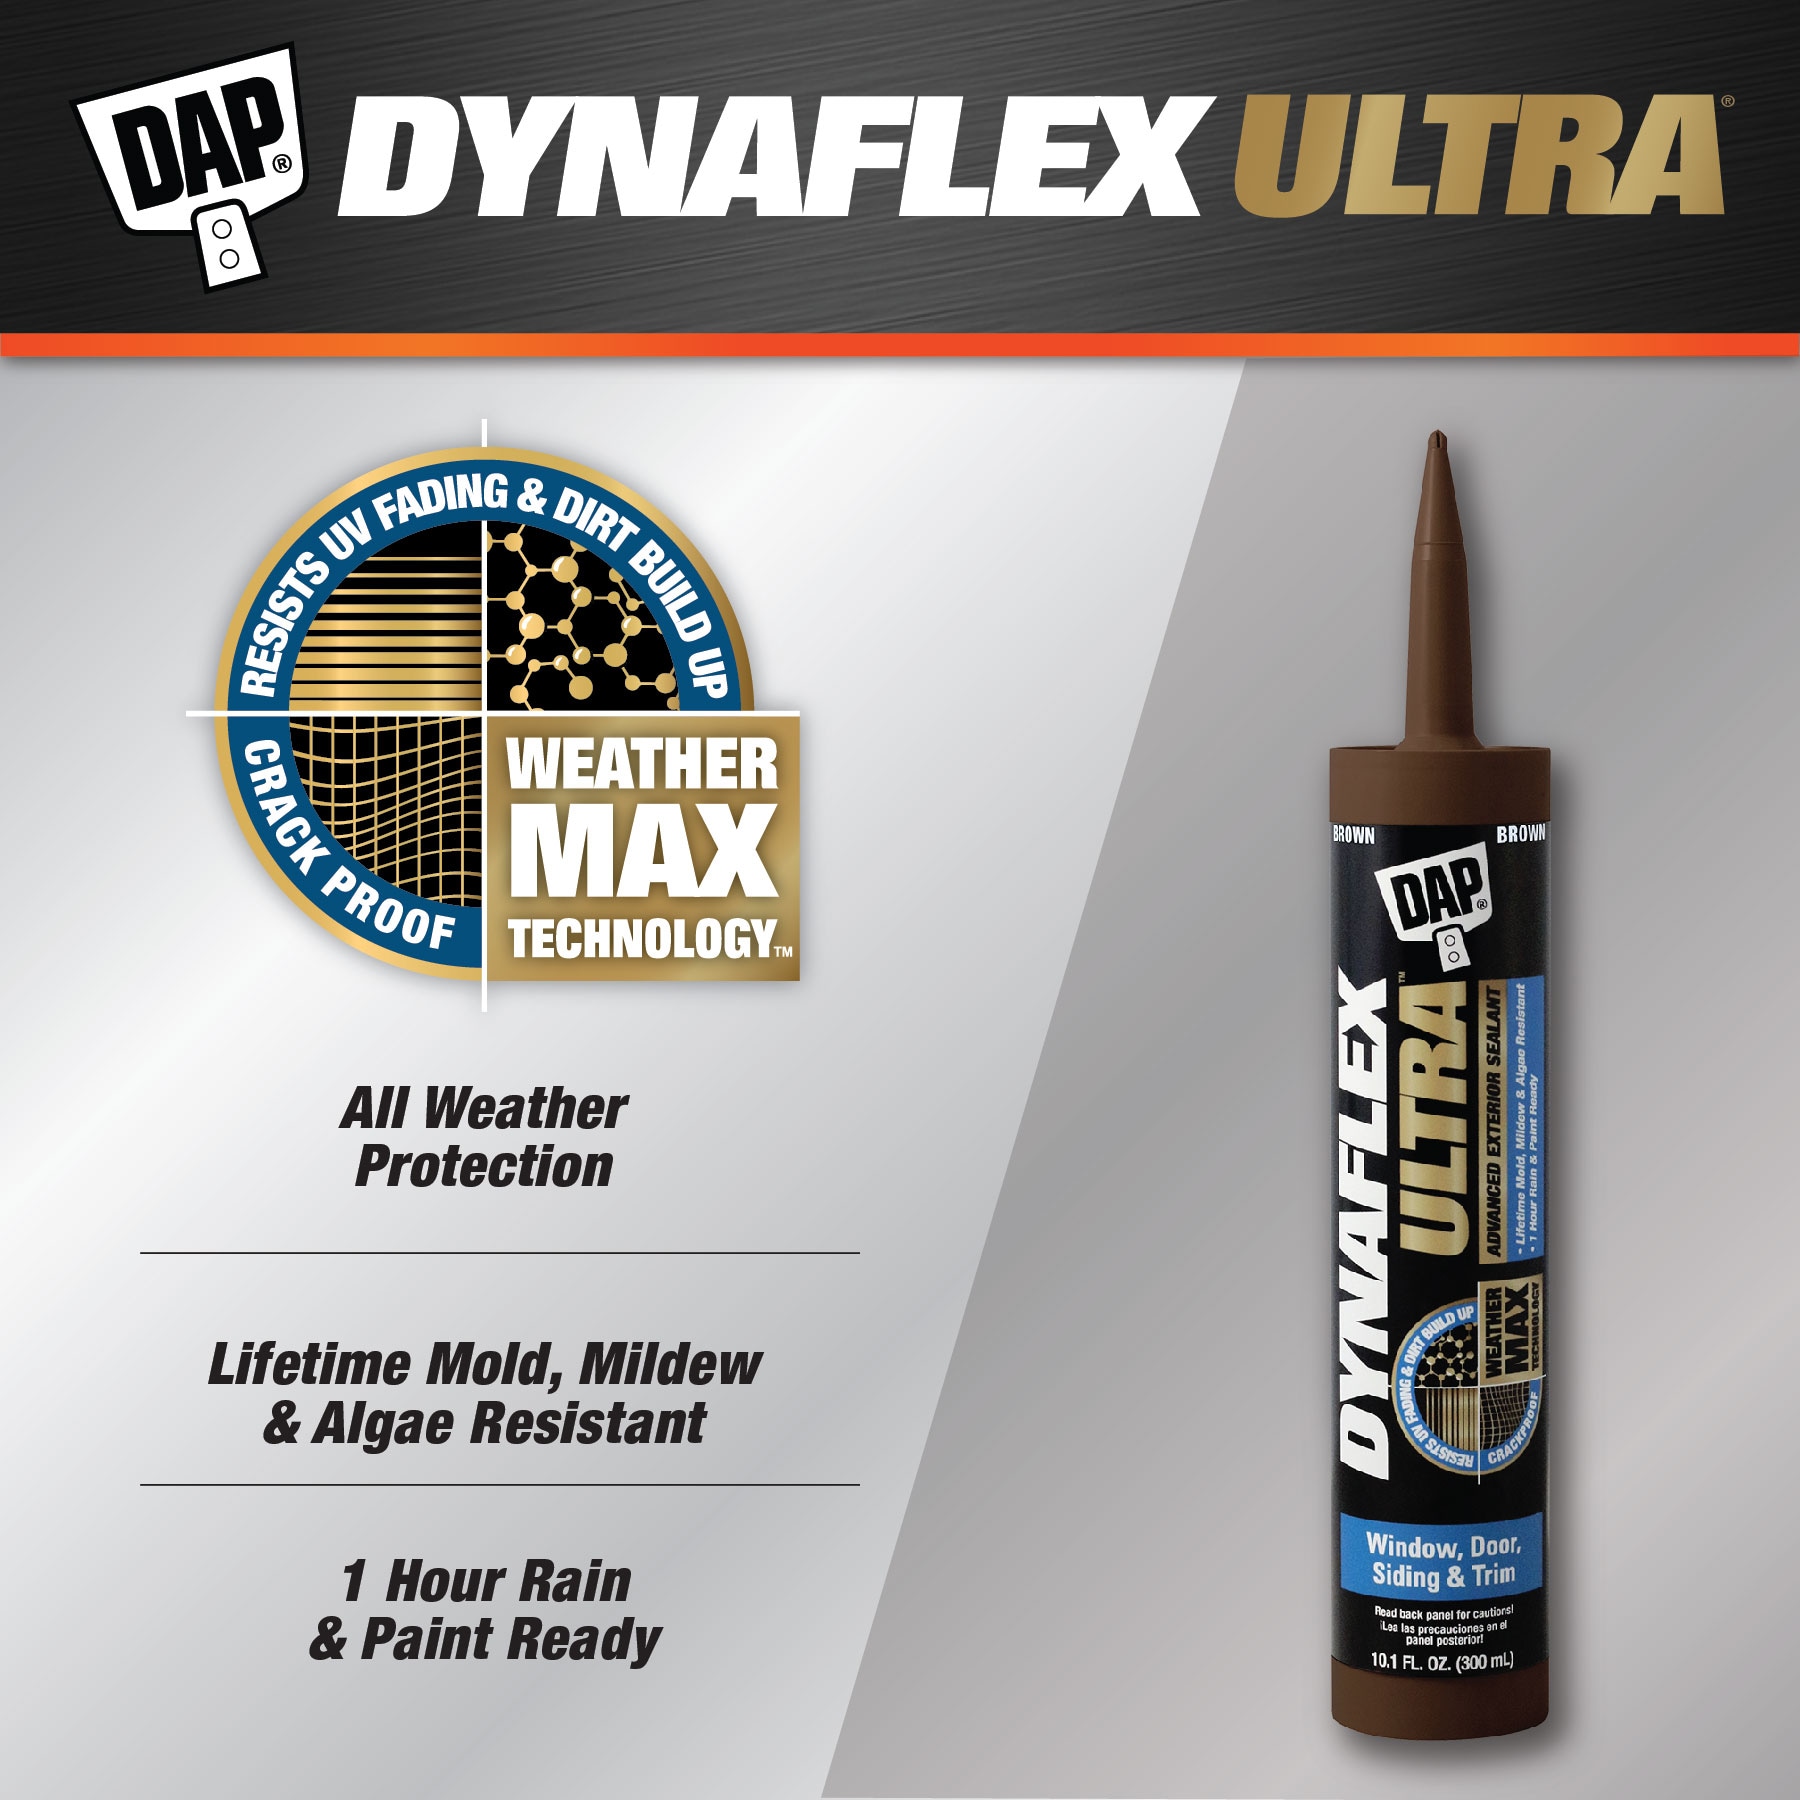 10.1-oz Brown Caulk the Dynaflex at Caulk department Ultra DAP Paintable in Latex